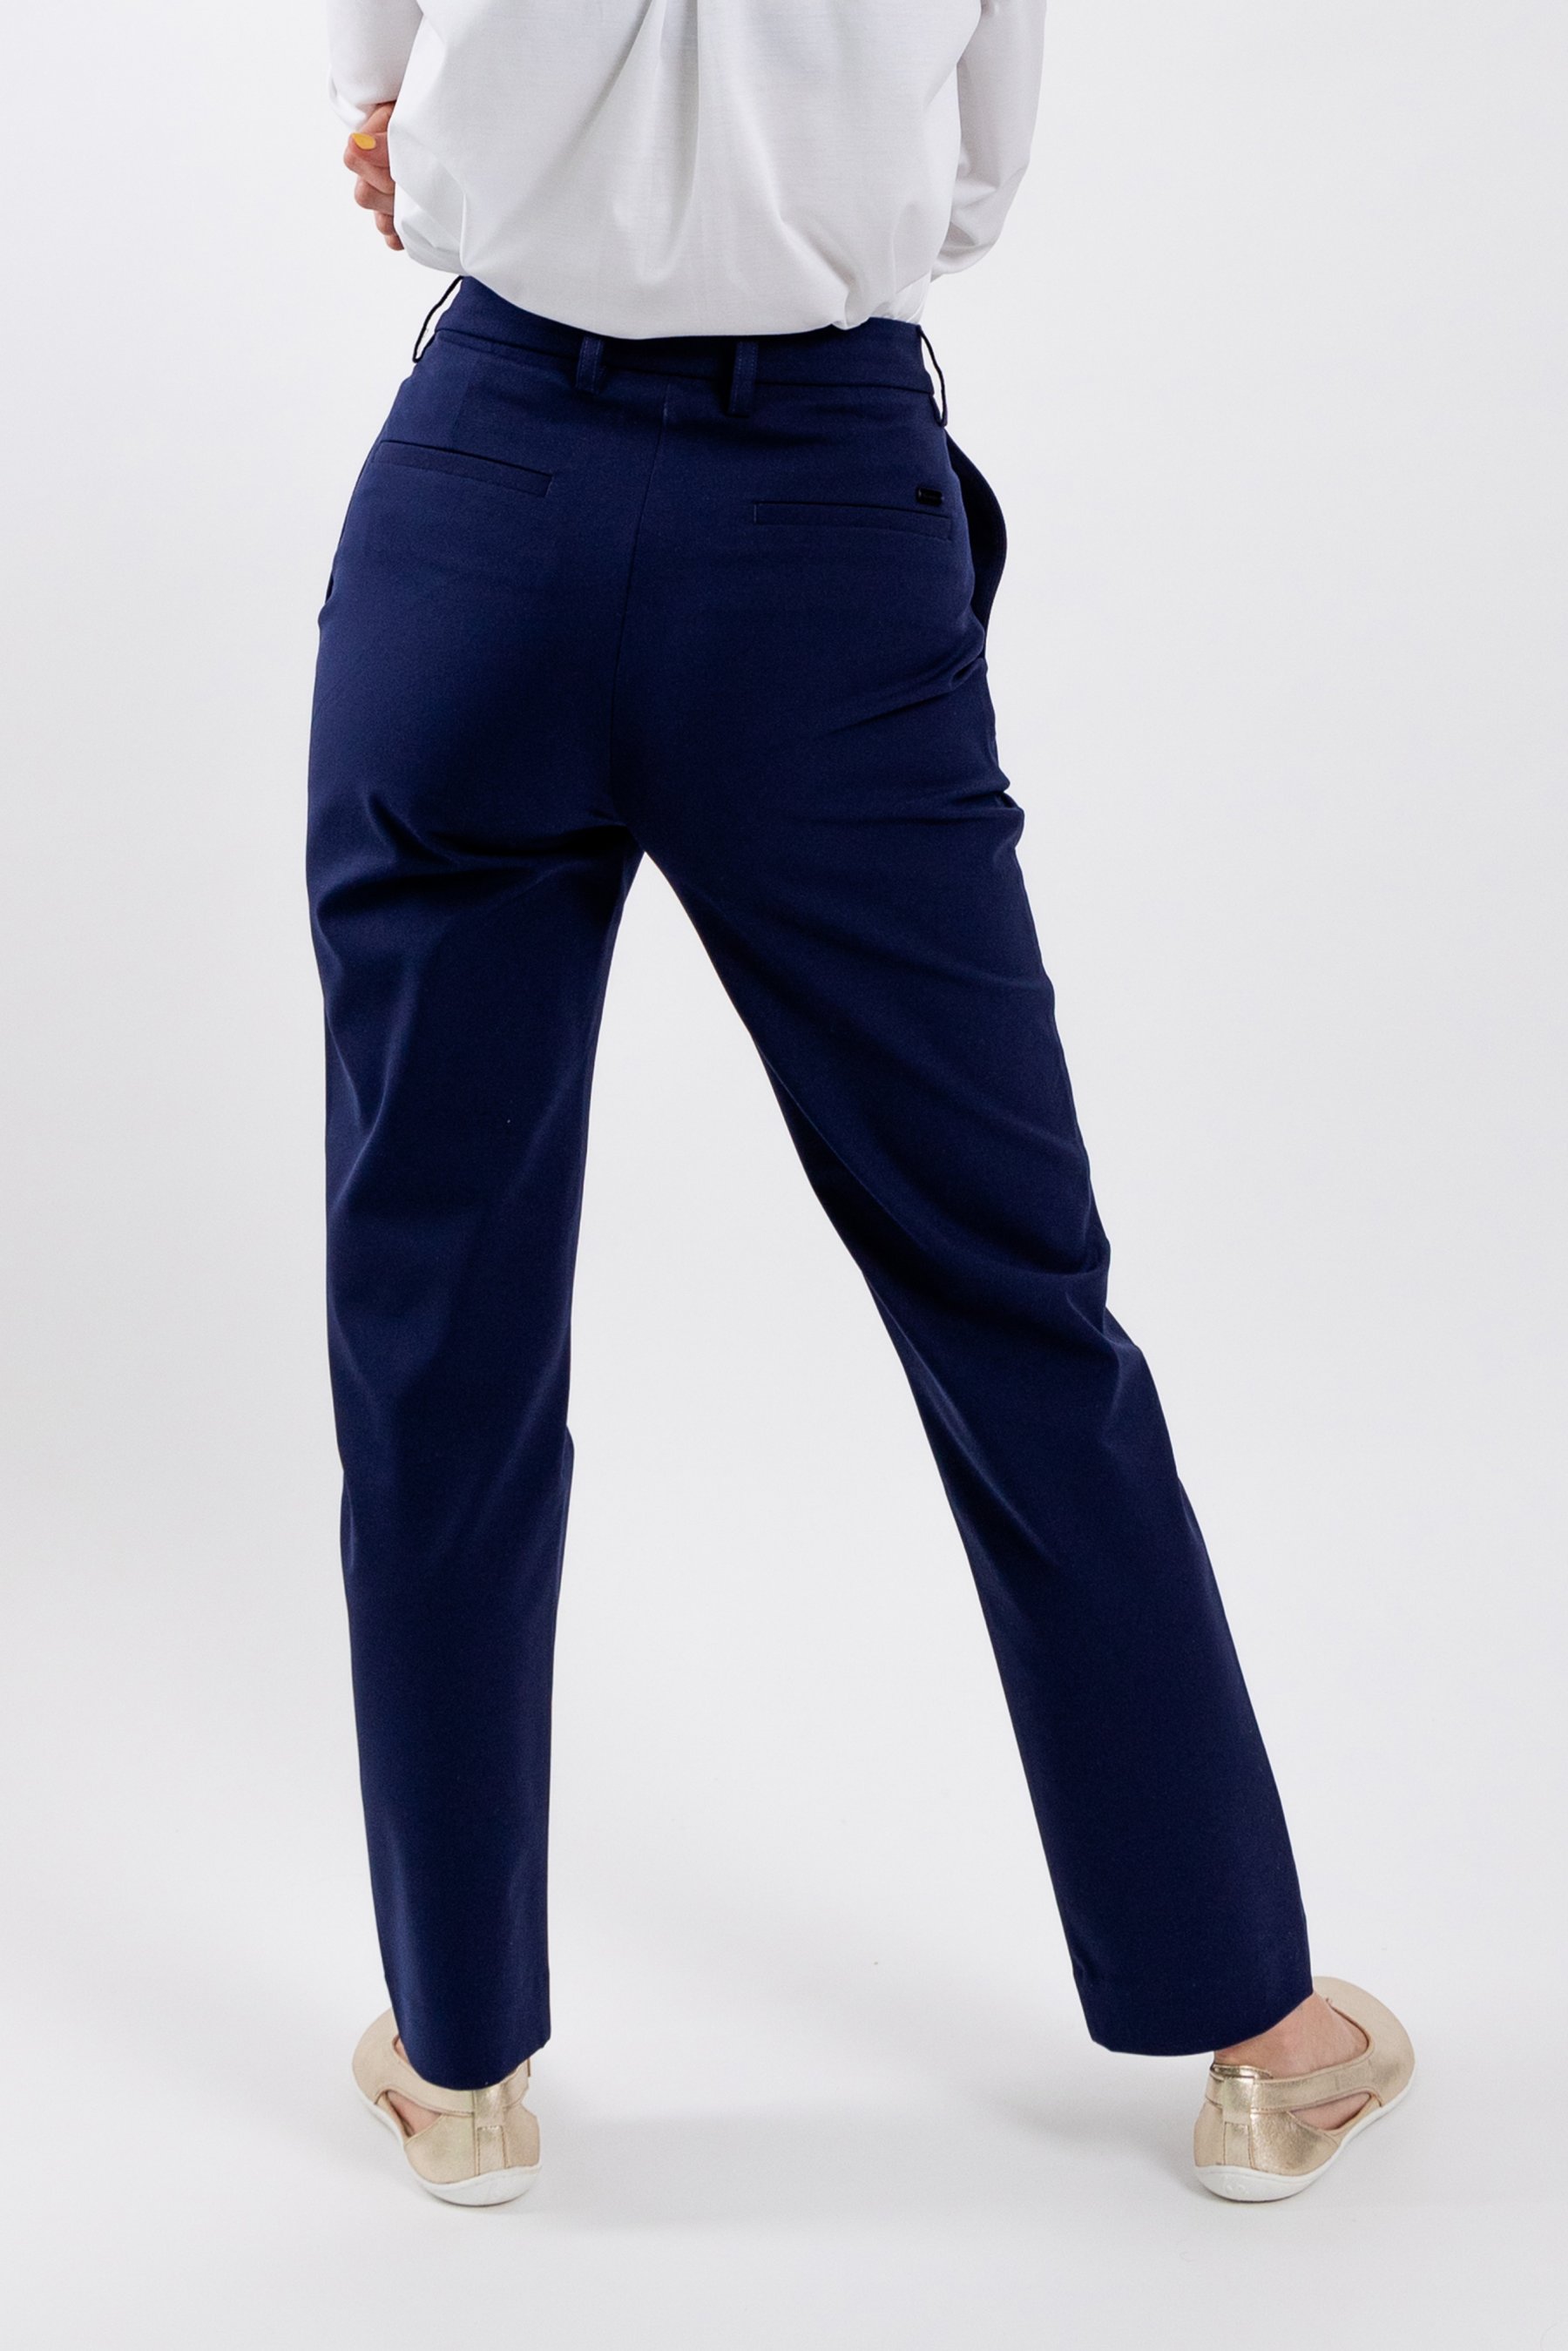 Big Elephant Navy Blue Classic Stretch Dress Pants Women's Size Medium -  beyond exchange